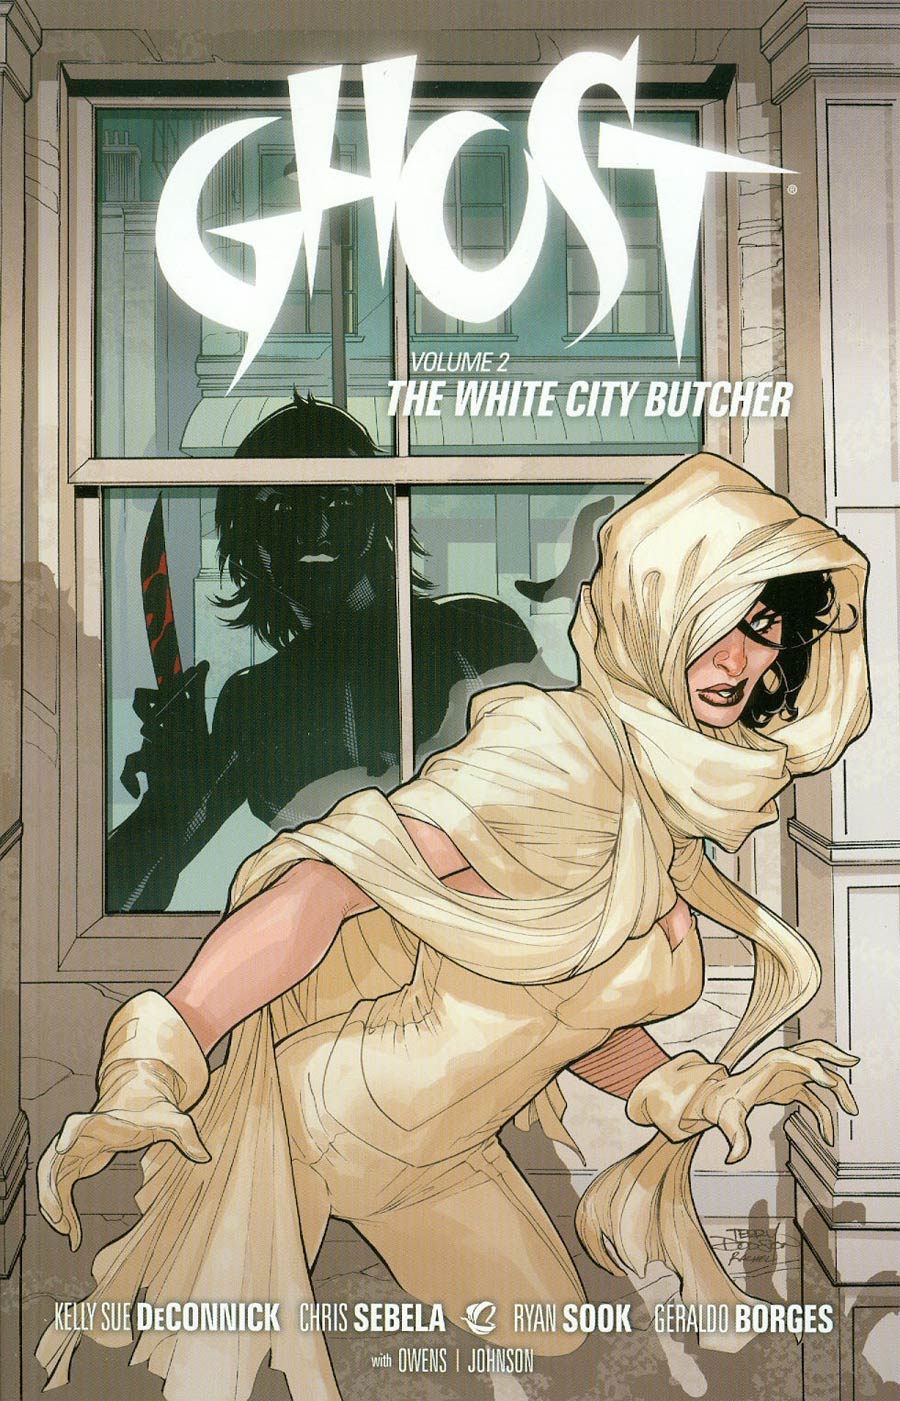 Ghost Vol 2 White City Butcher TP